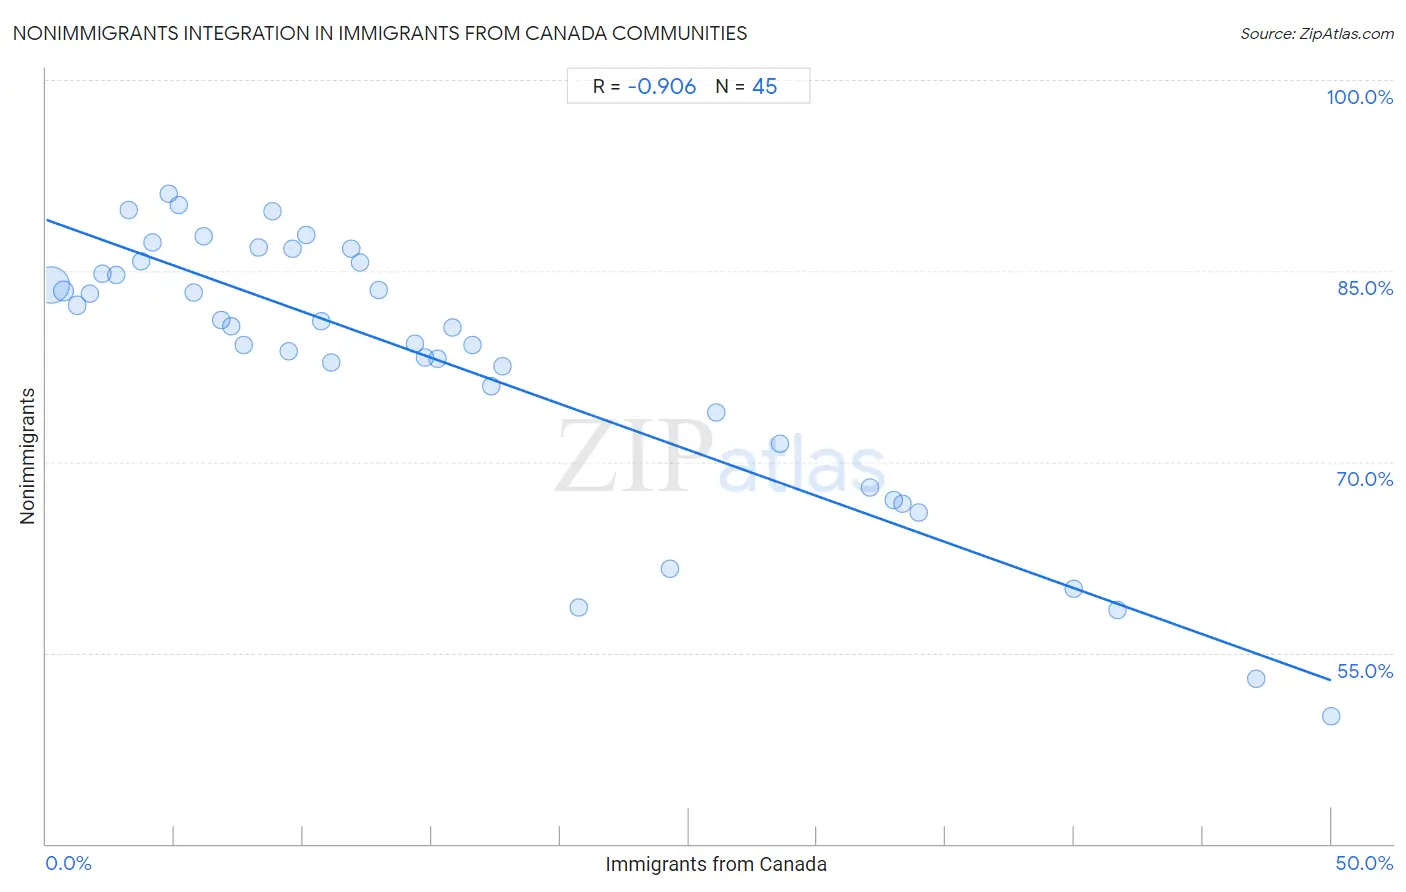 Immigrants from Canada Integration in Nonimmigrants Communities